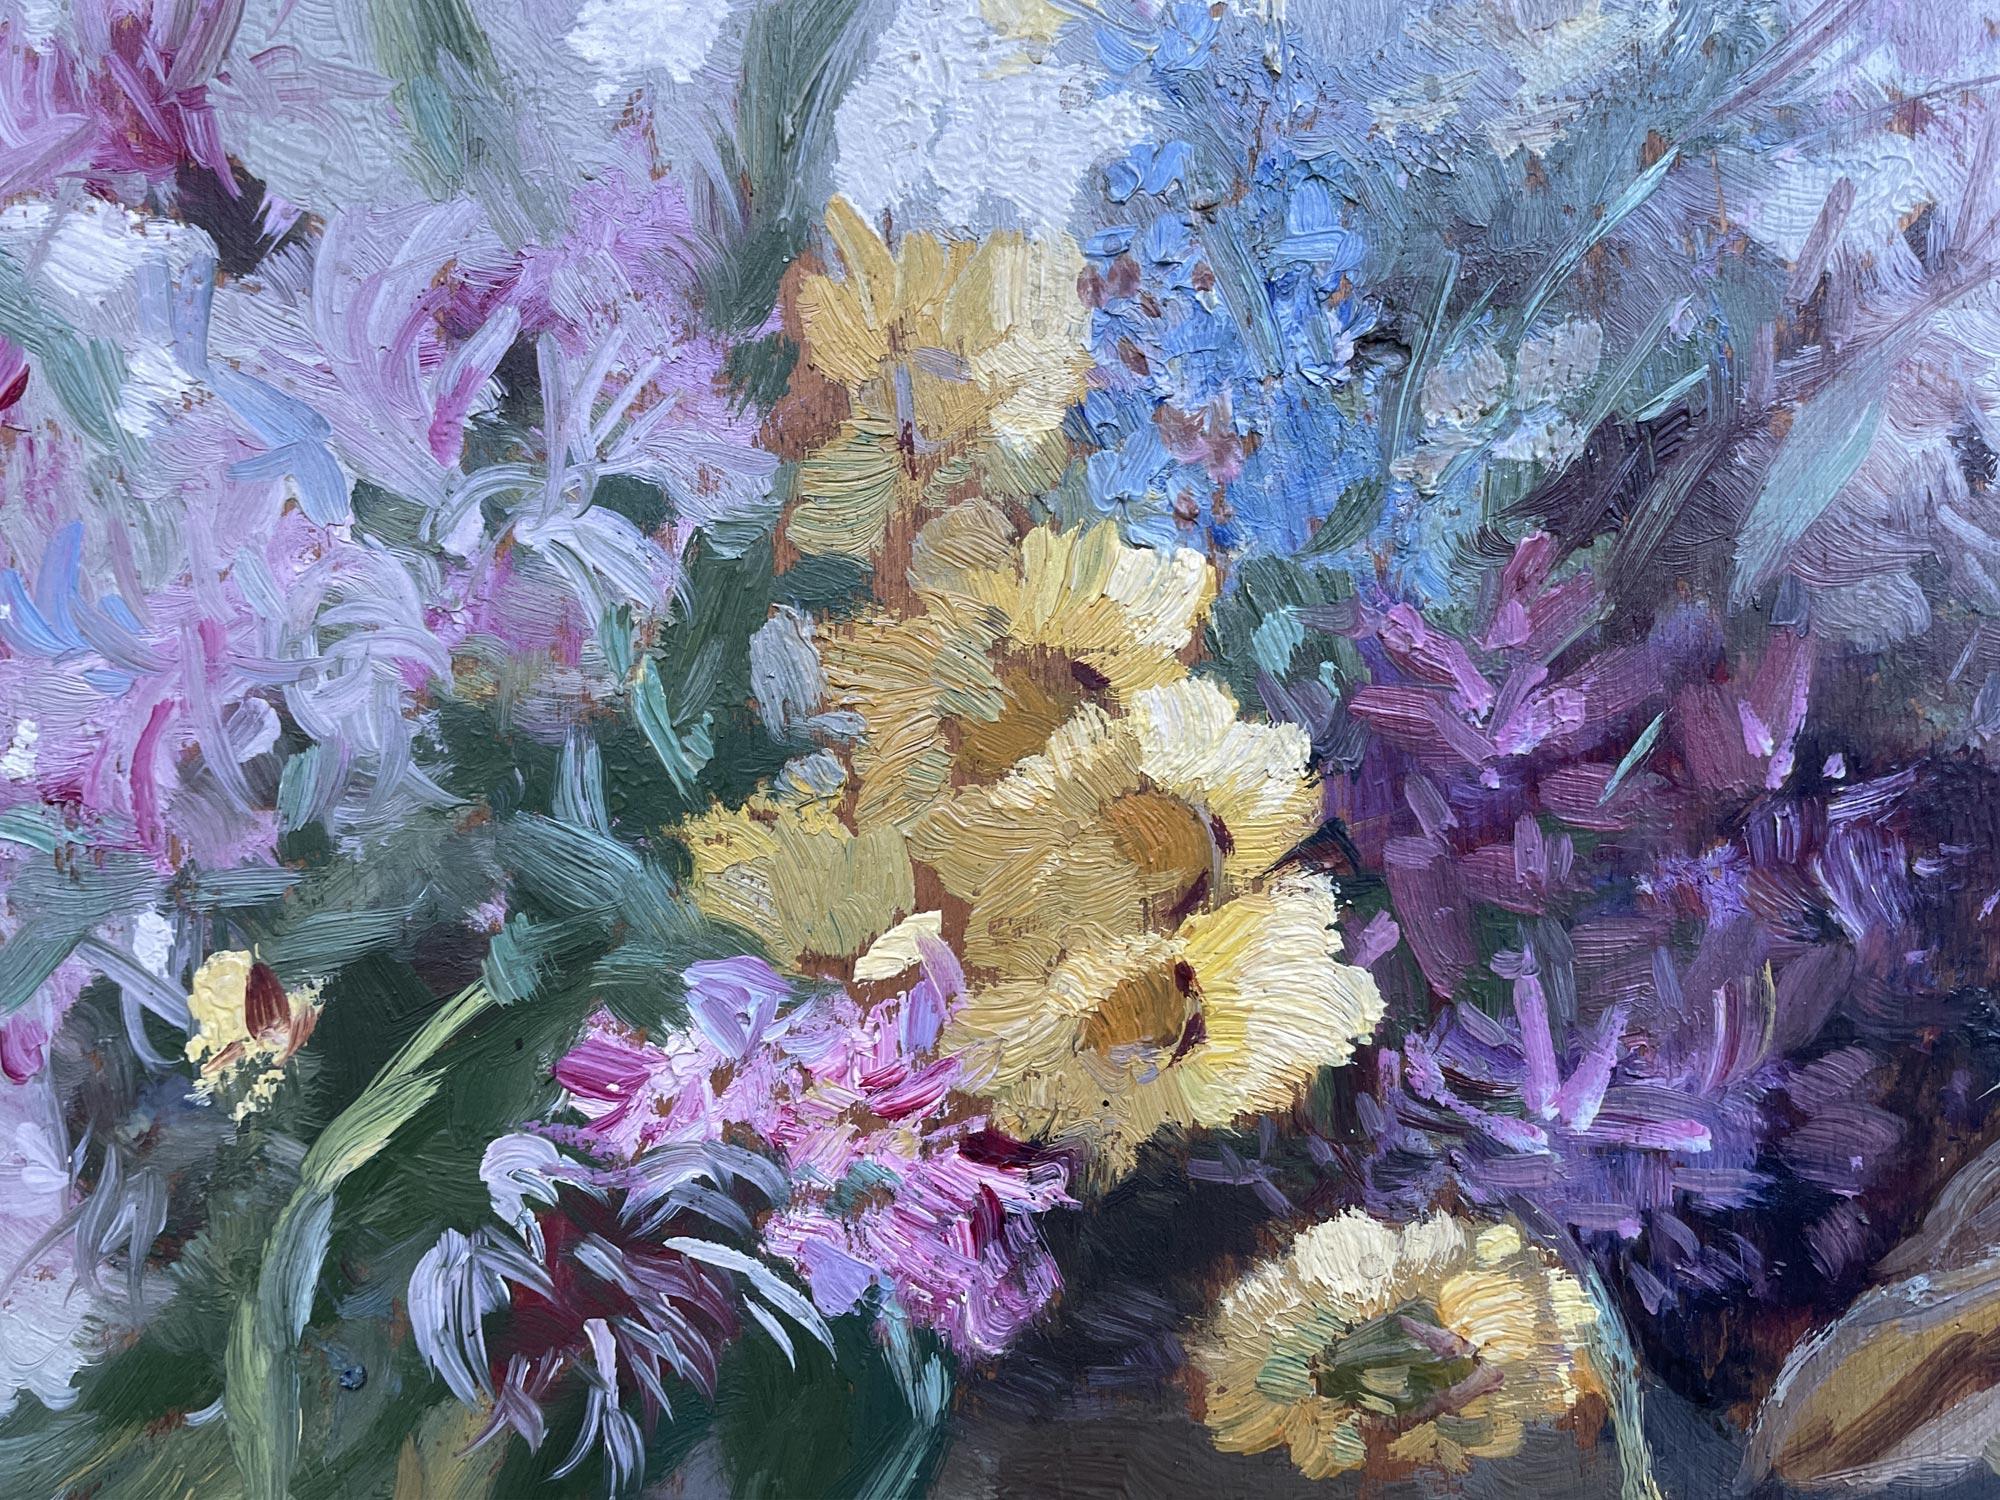 Oiled Mountain Wildflowers Oil on Canvas by Amelia da Forno Casonato, Italy 1930